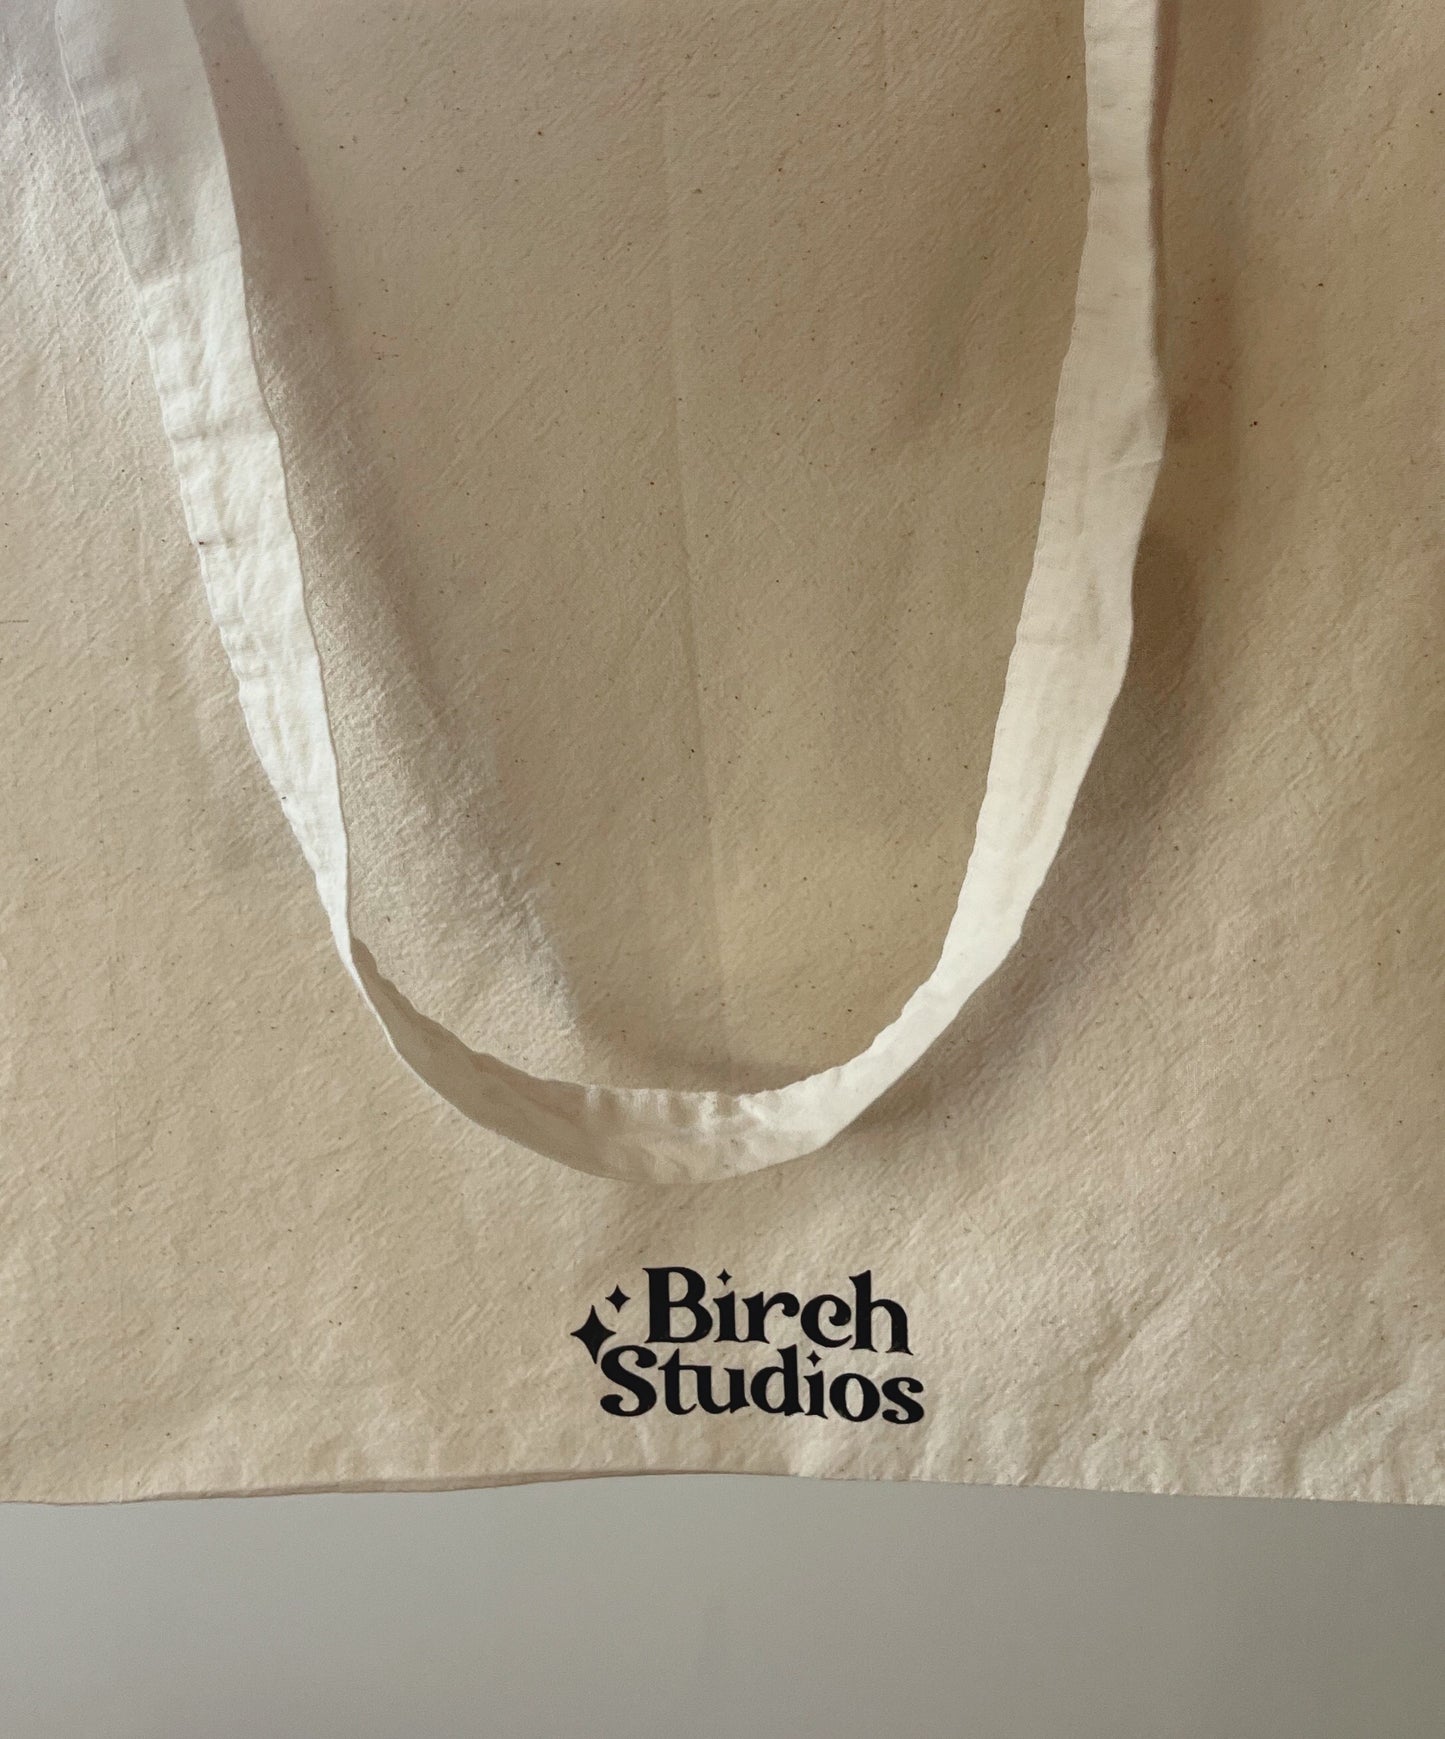 Kinda Feels Like Christmas Tote Bag | A Very Merry Birch Studios Christmas